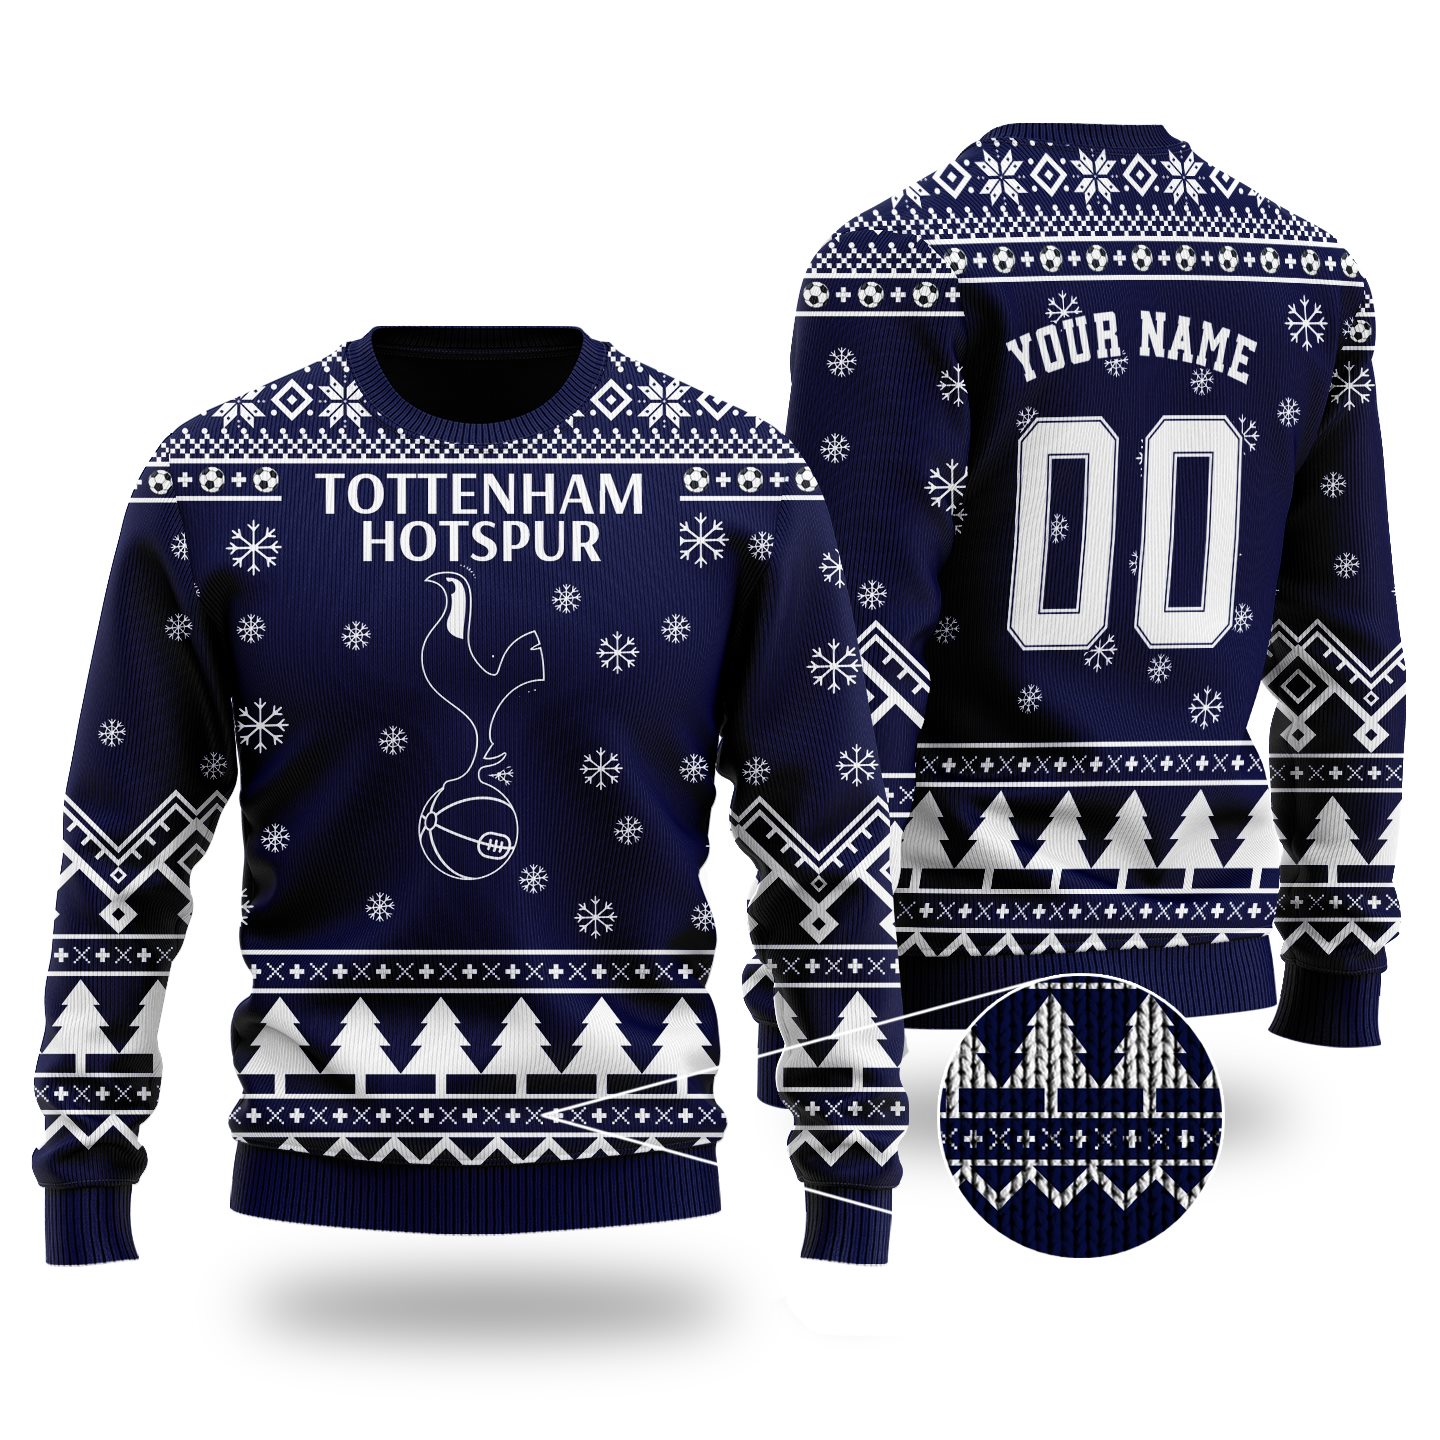 LIMITED DESIGN Tottenham Hotspur Big Logo Pine Trees Ugly Christmas Sweater